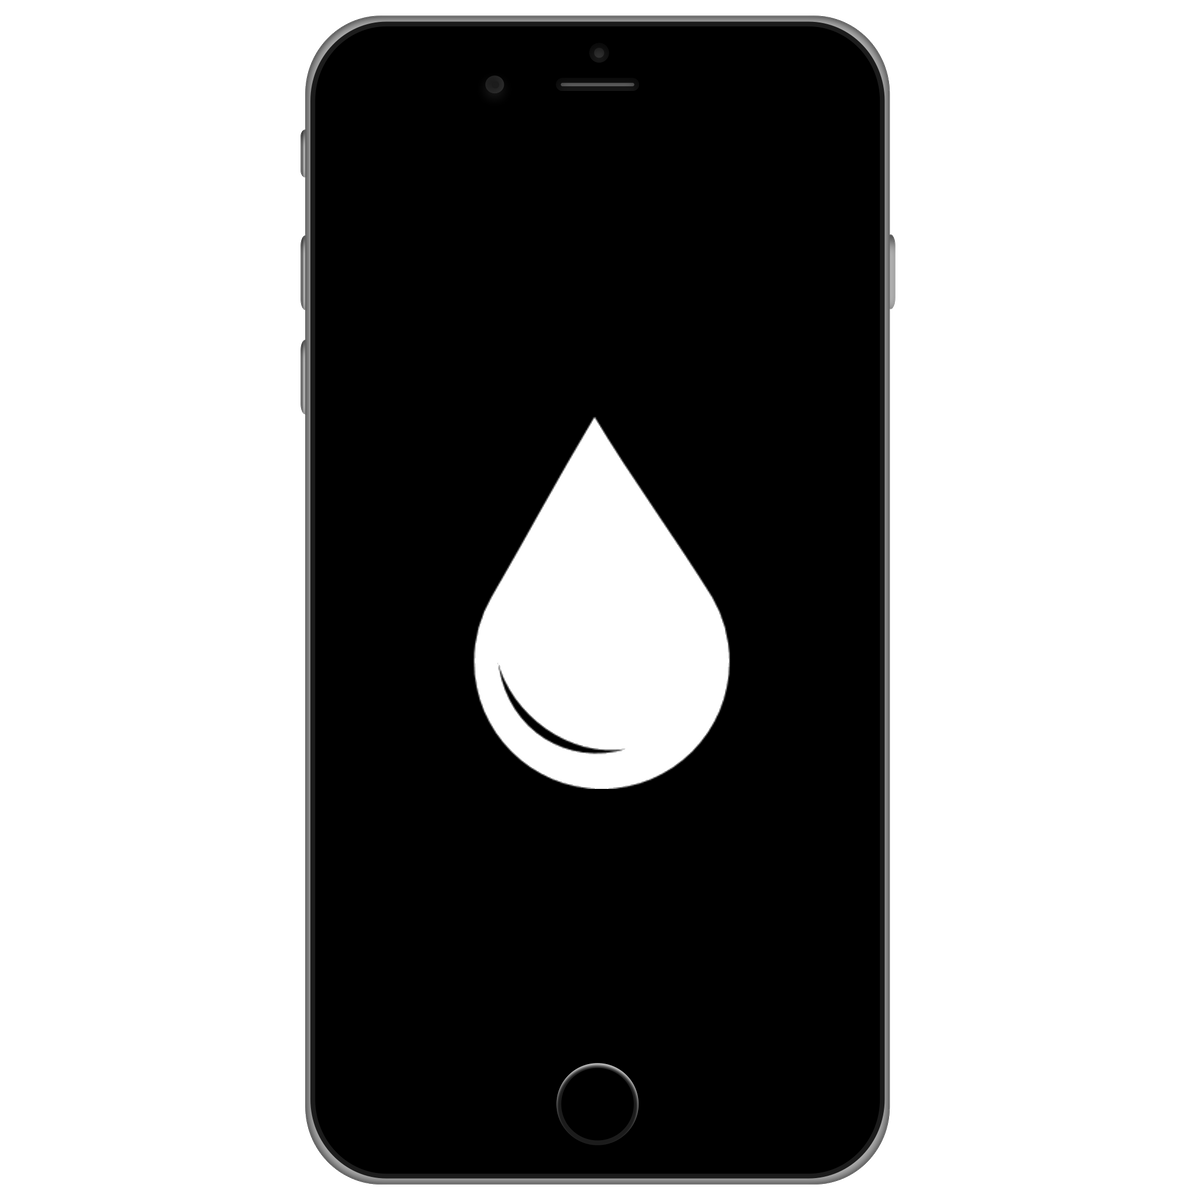 Repair iPhone 8 Plus Water Damage - TechPros